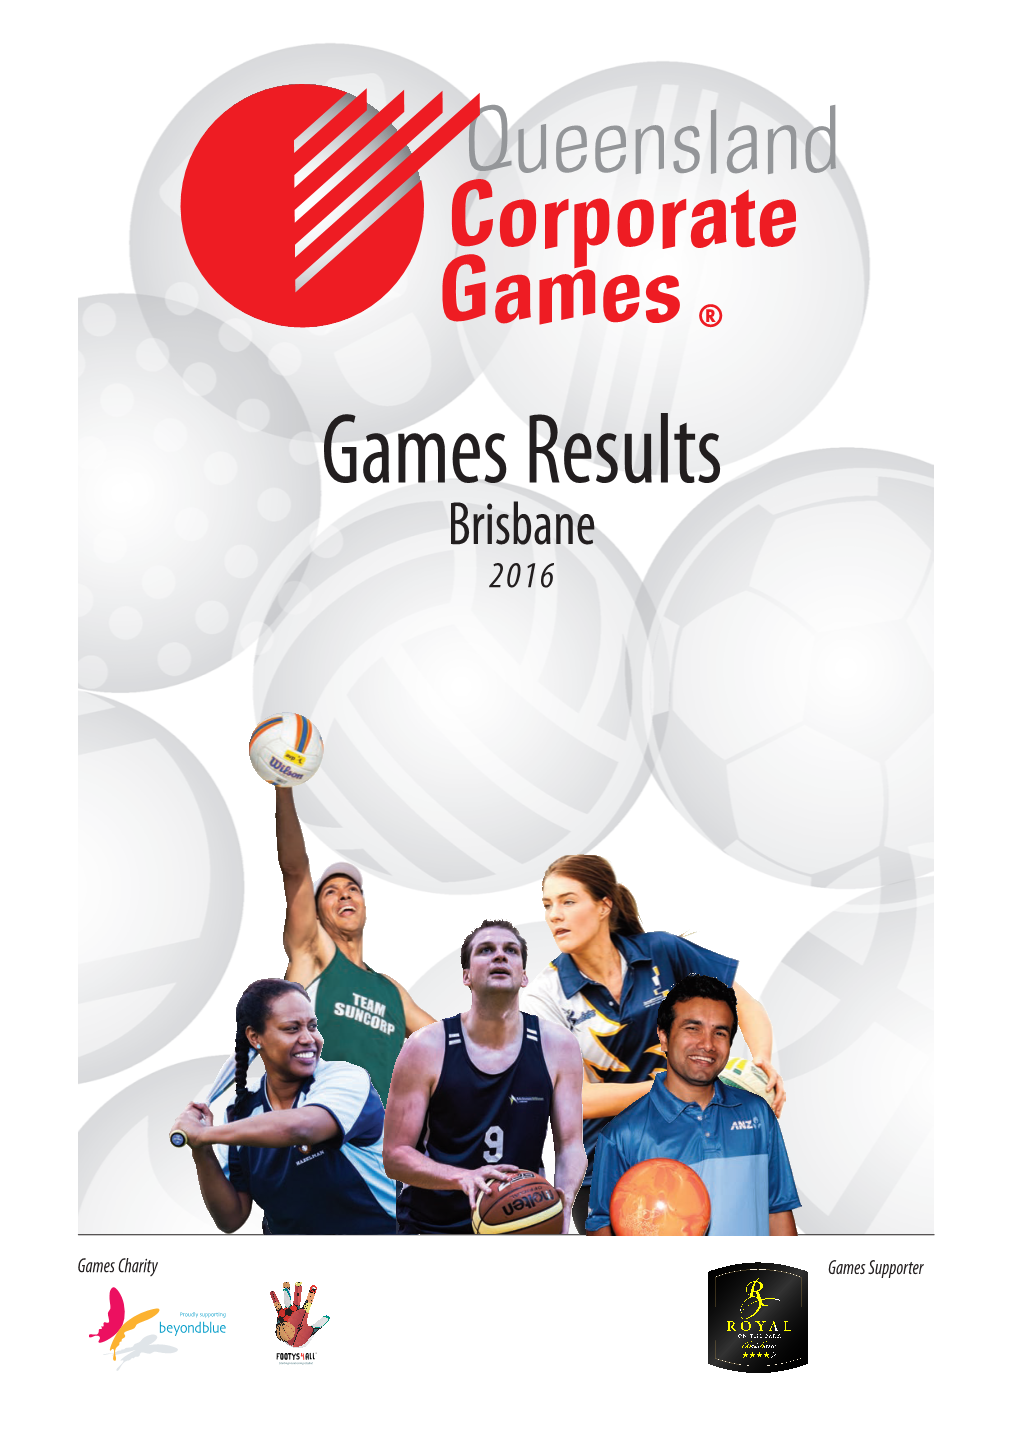 Queensland Corporate Games Games Results Brisbane 2016